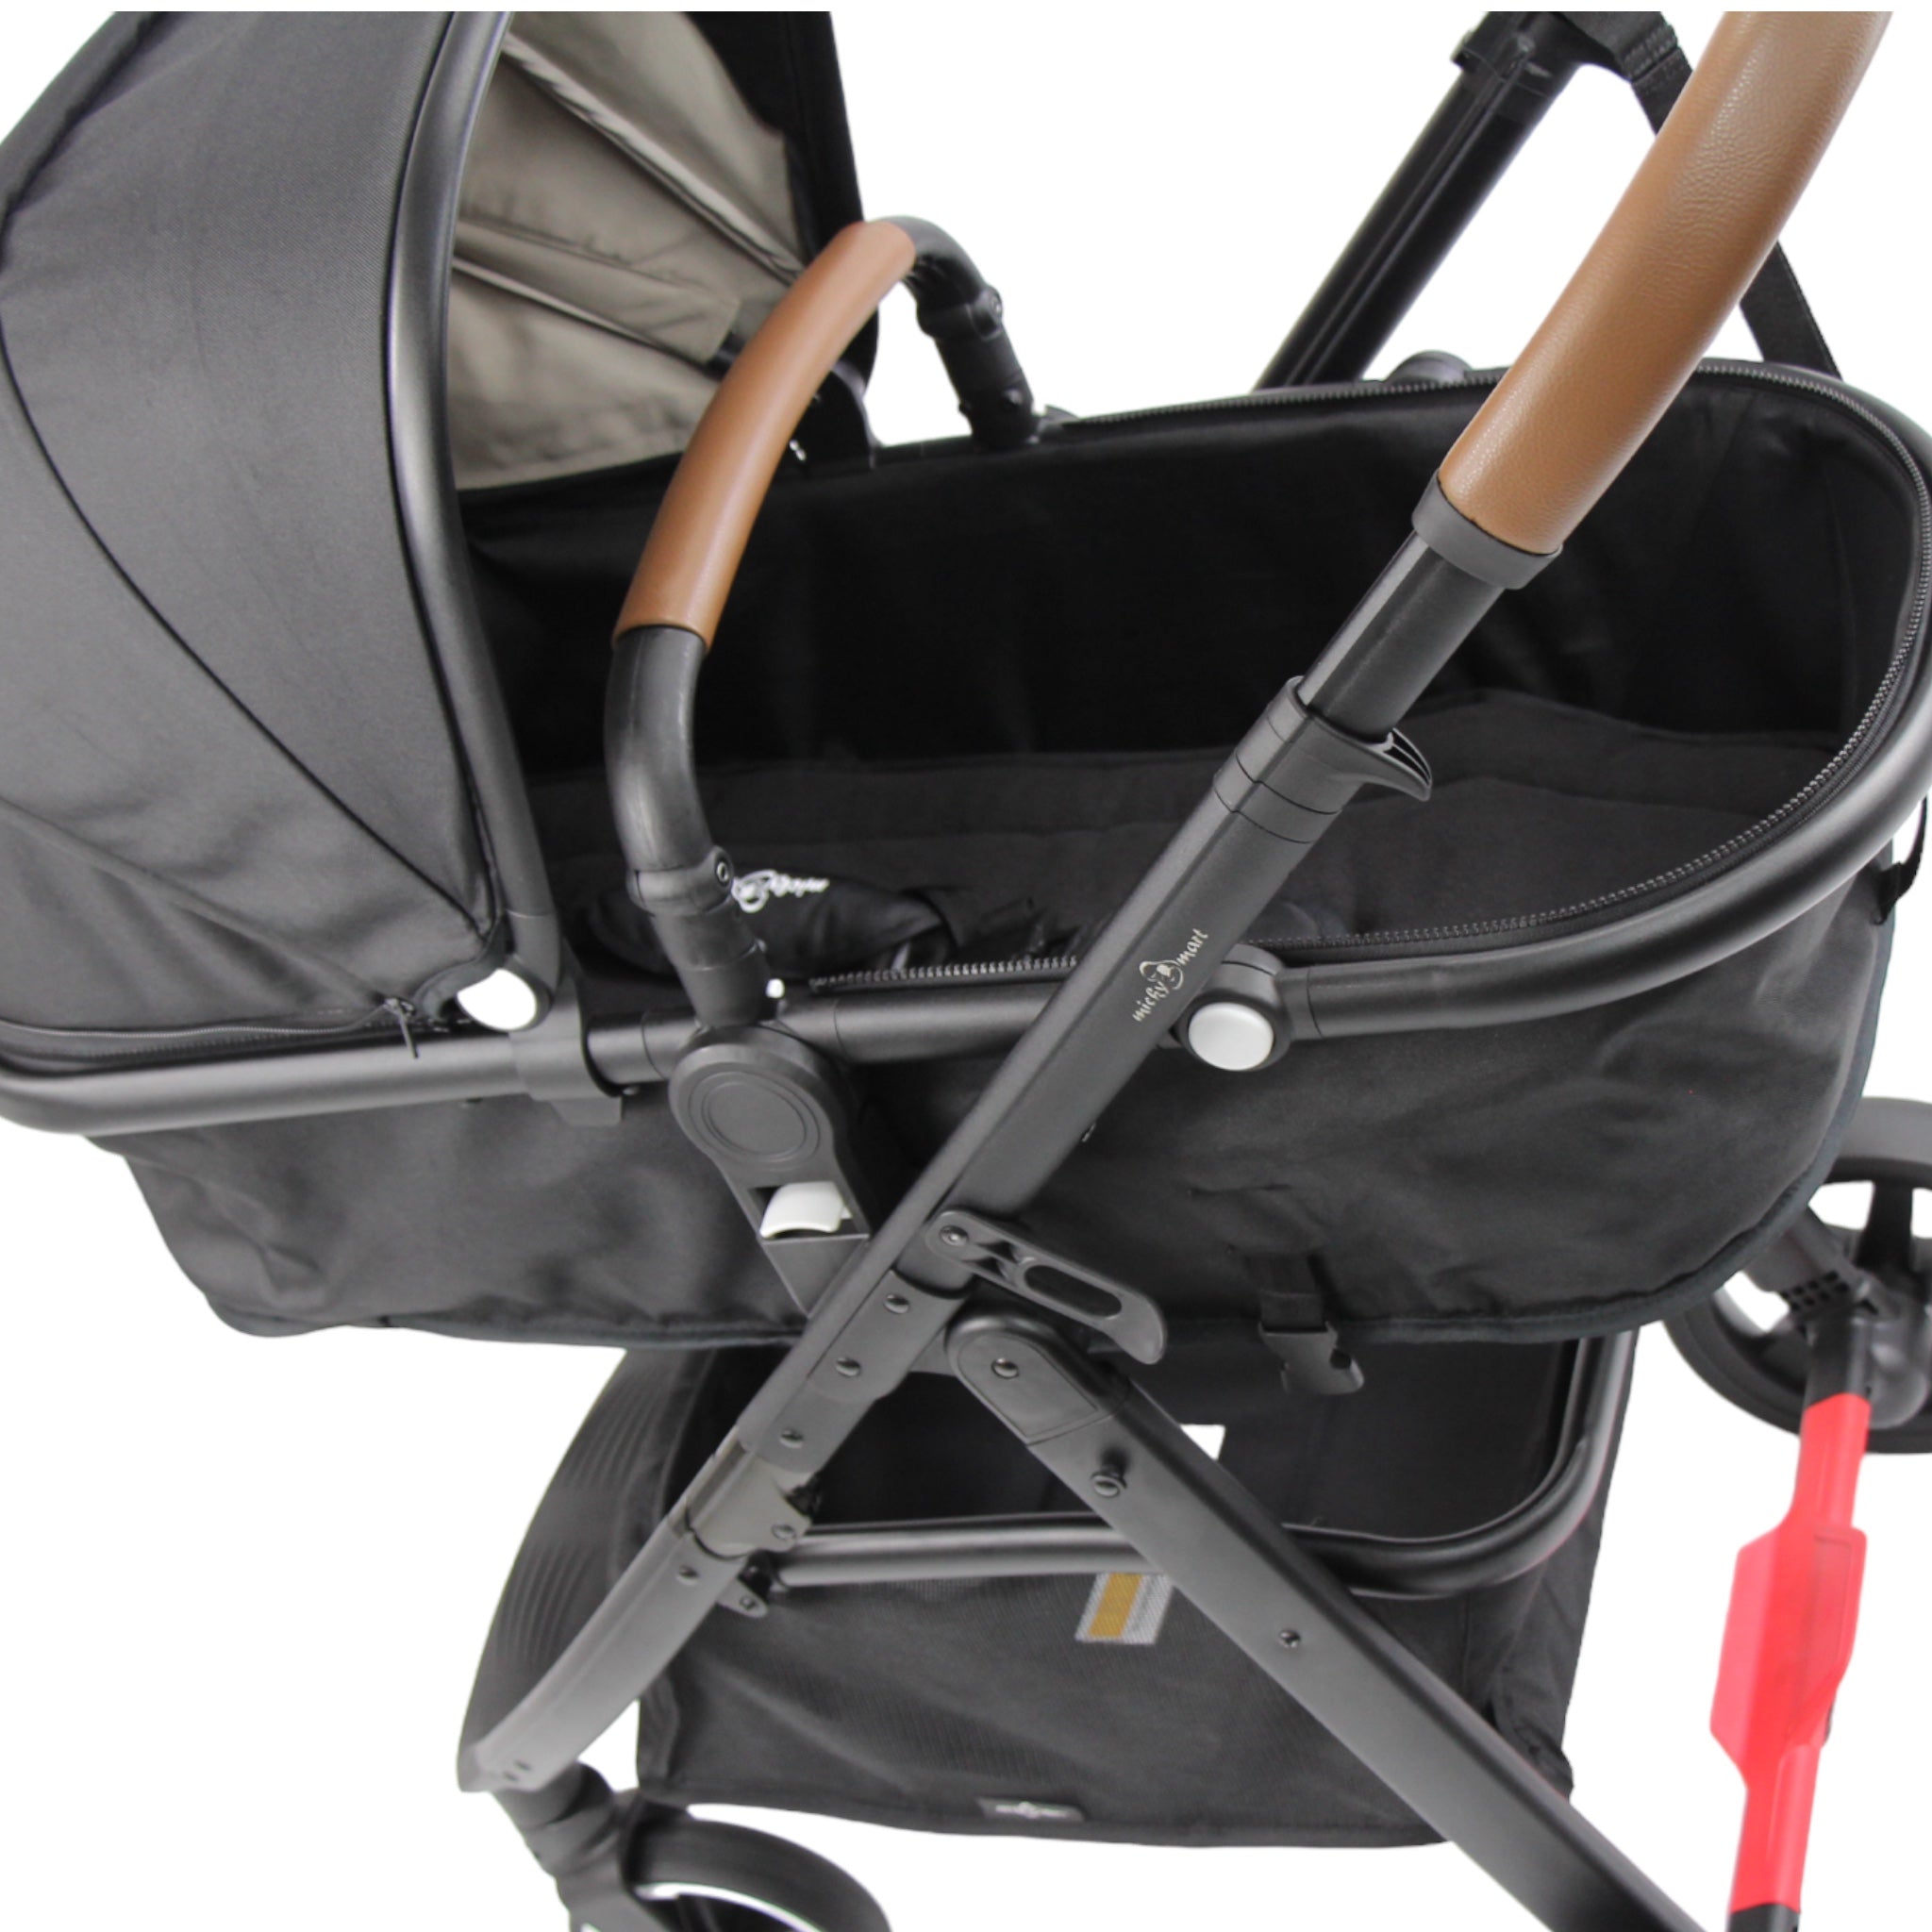 Micky Mart Baby Pram / Stroller 2 in 1 Convertible Bassinet Leather Handle -Black